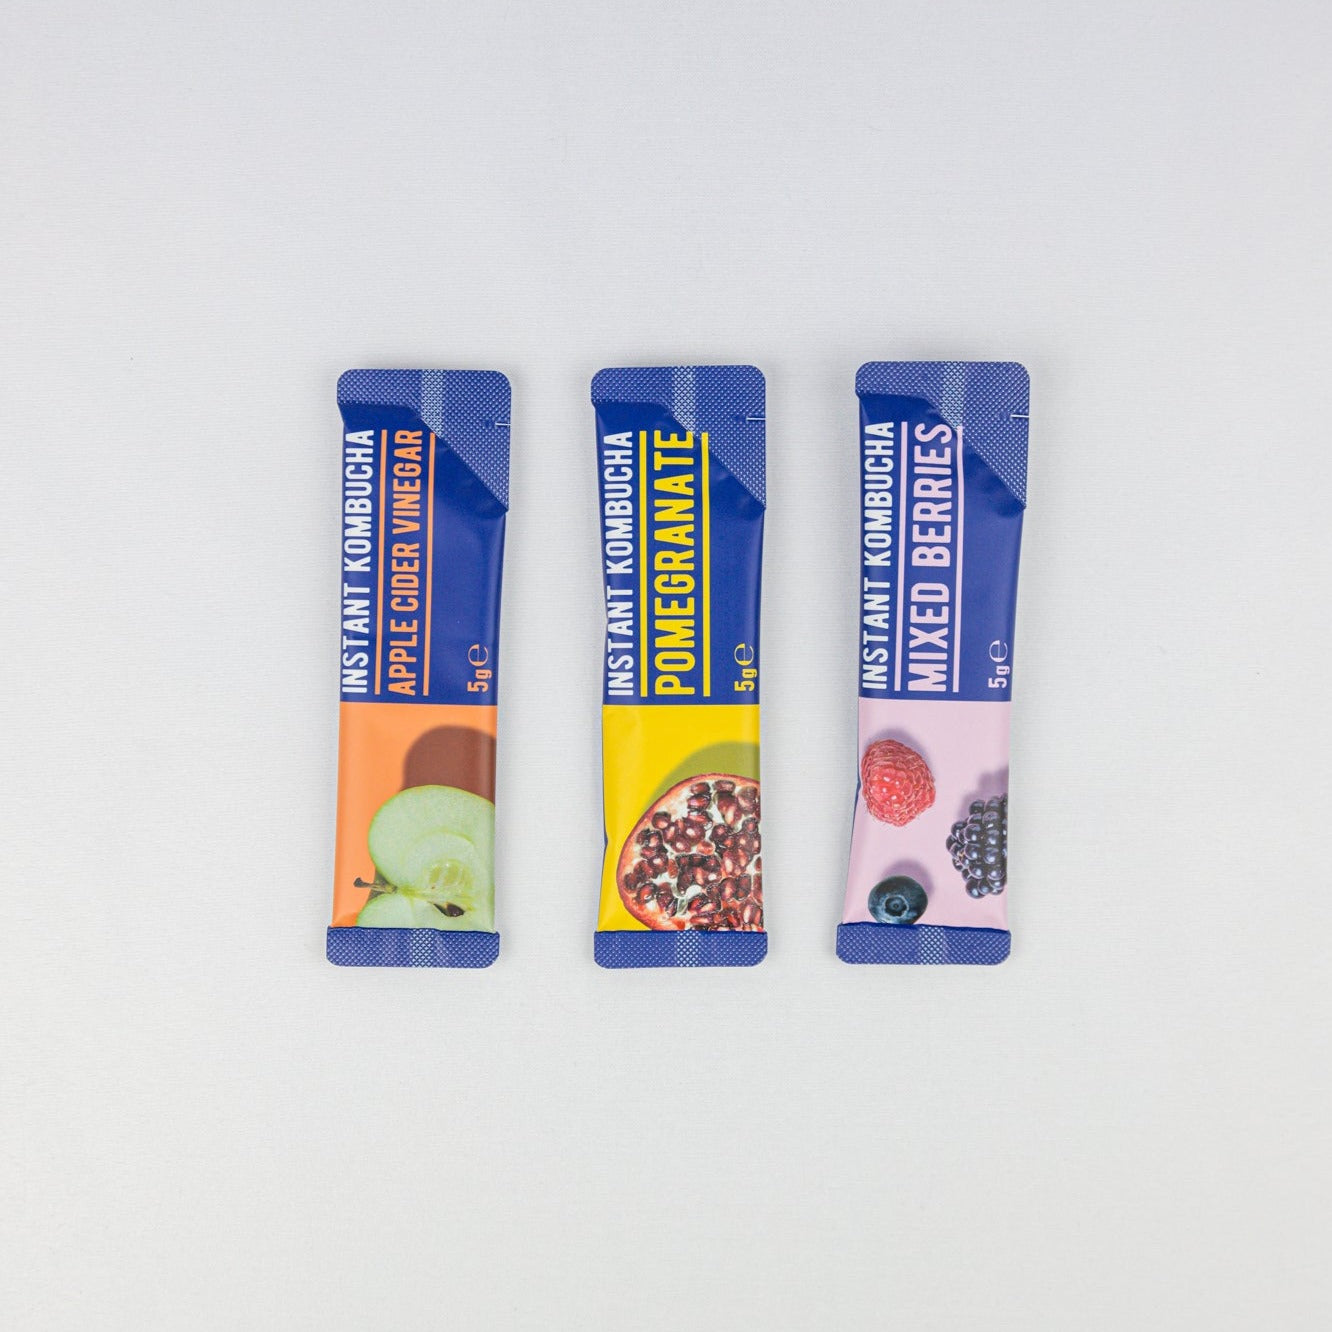 Instant Kombucha Box - Variety Pack Flavour Sachets 6 x 5 ml